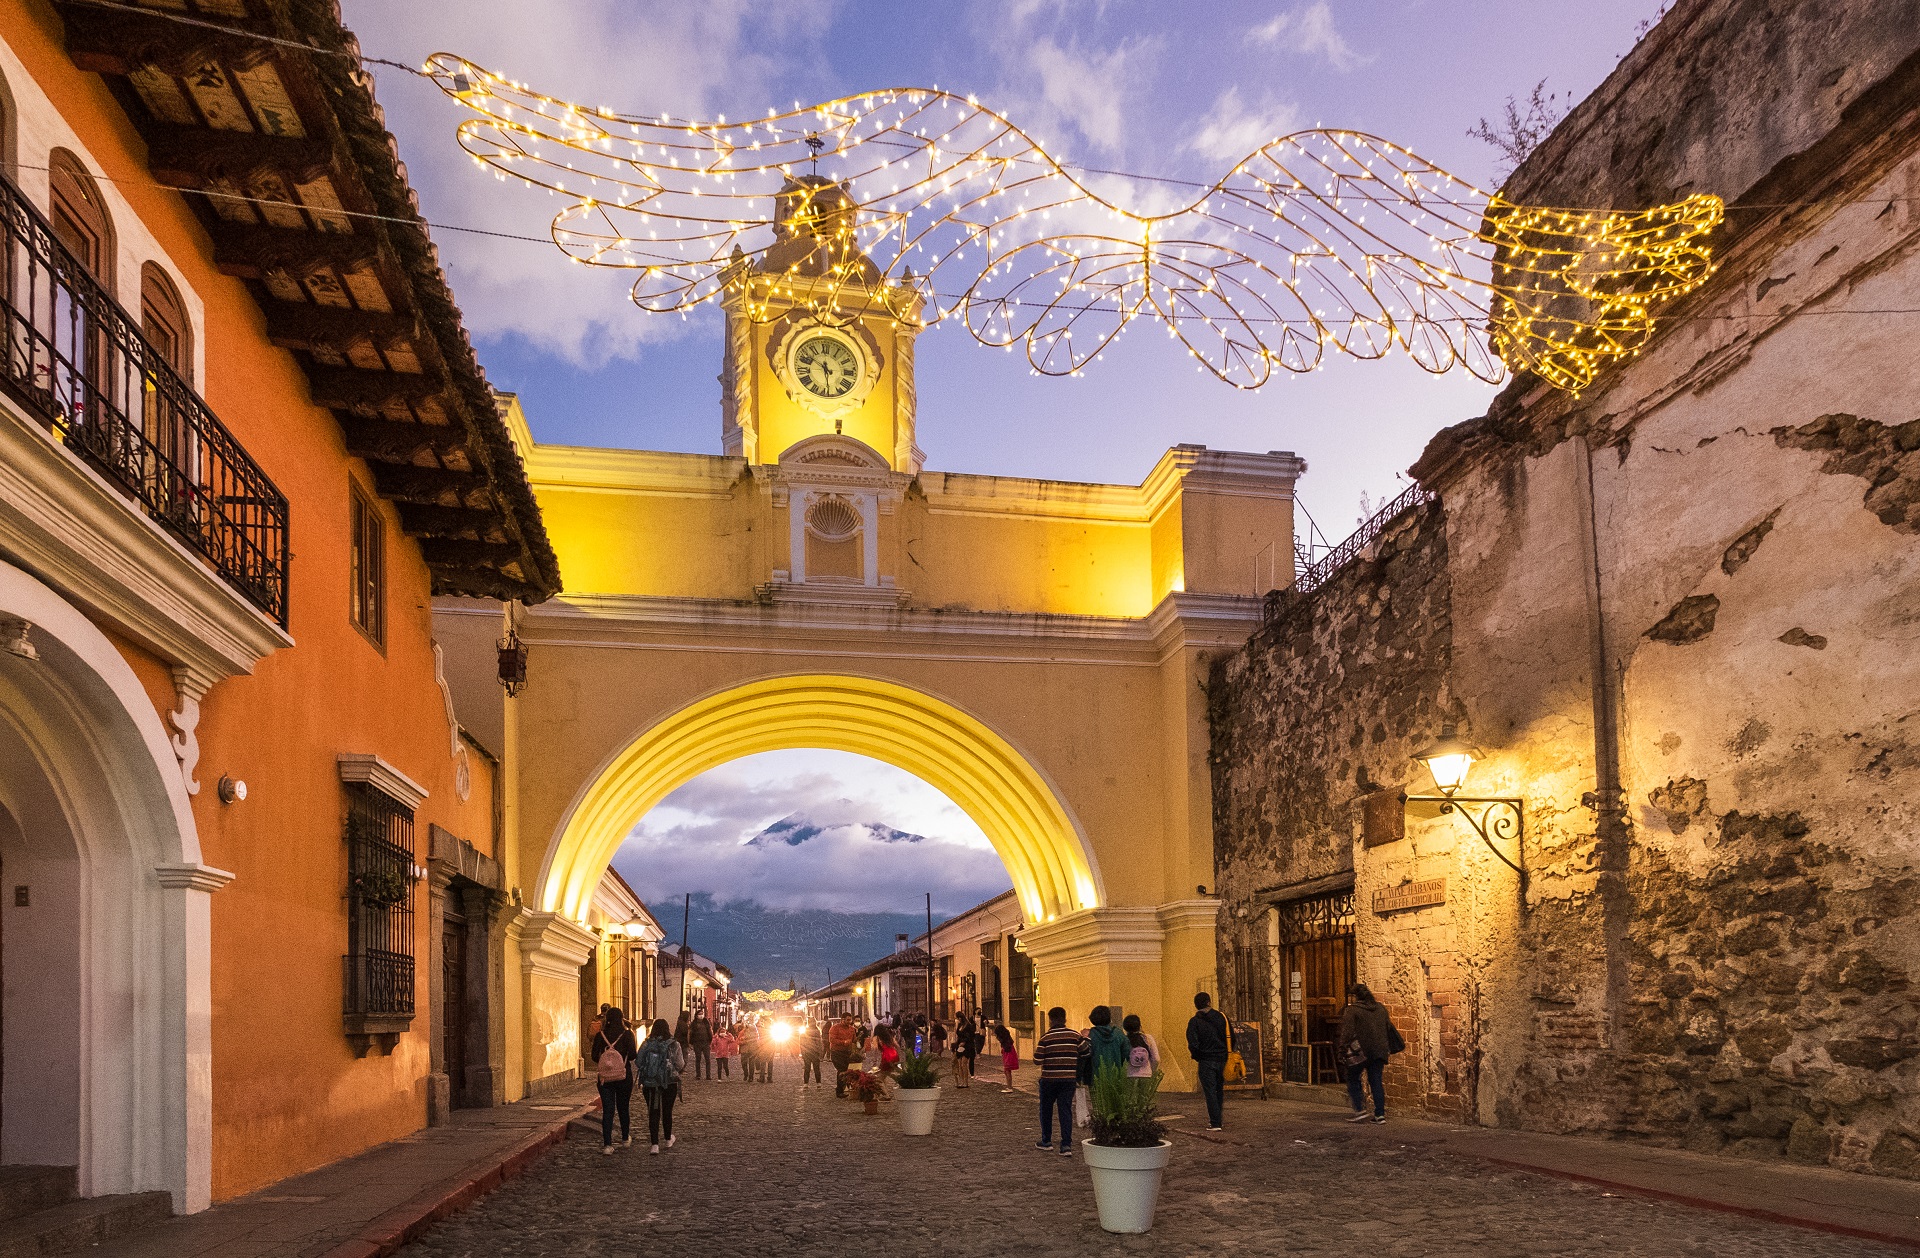 Calle del Arco at dusk in Antigua, Guatemala